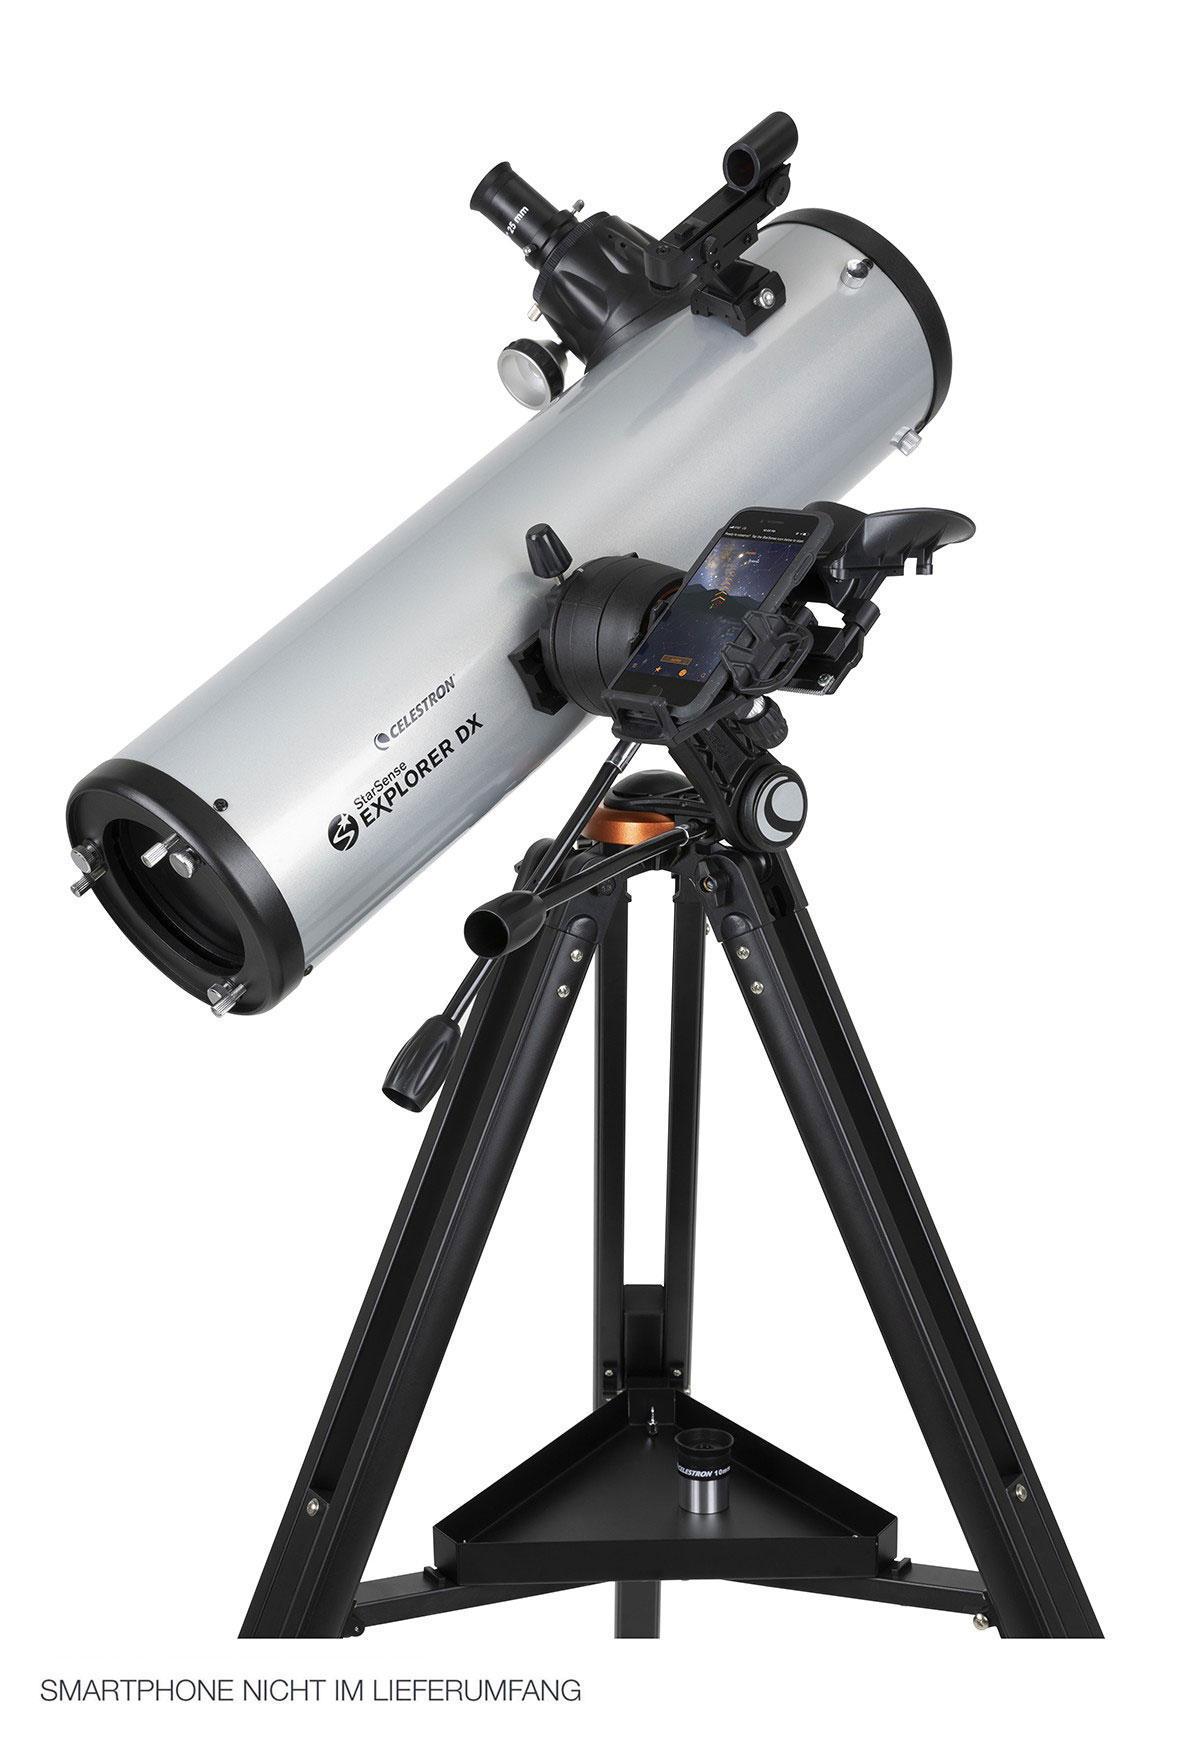 65x, DX Starsense Teleskop 26x, 130 mm, 130 CELESTRON AZ